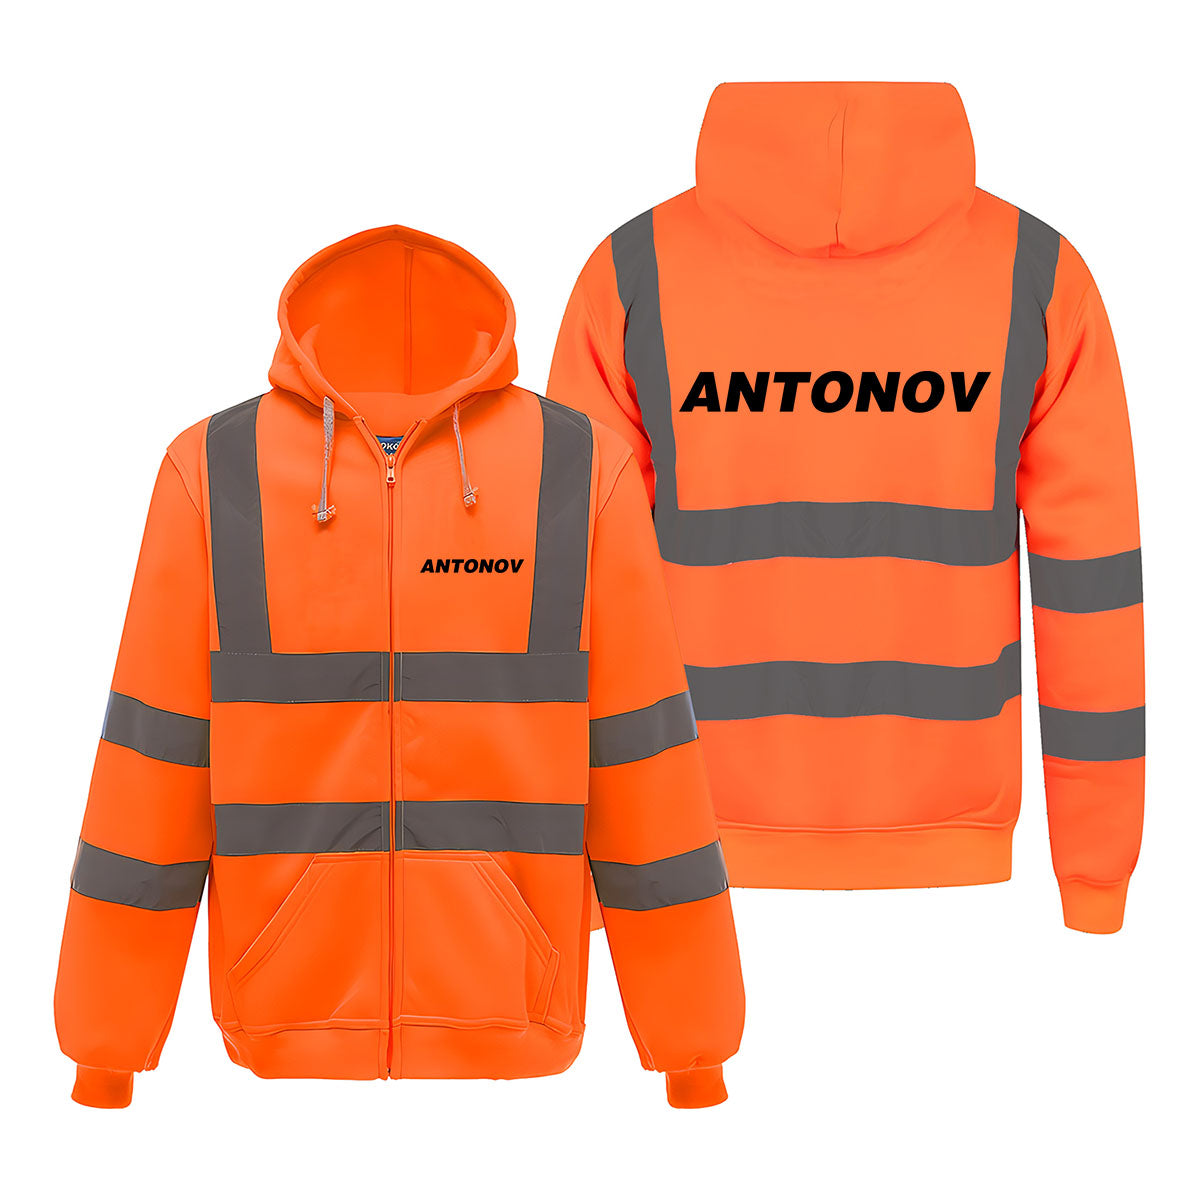 Antonov & Text Designed Reflective Zipped Hoodies